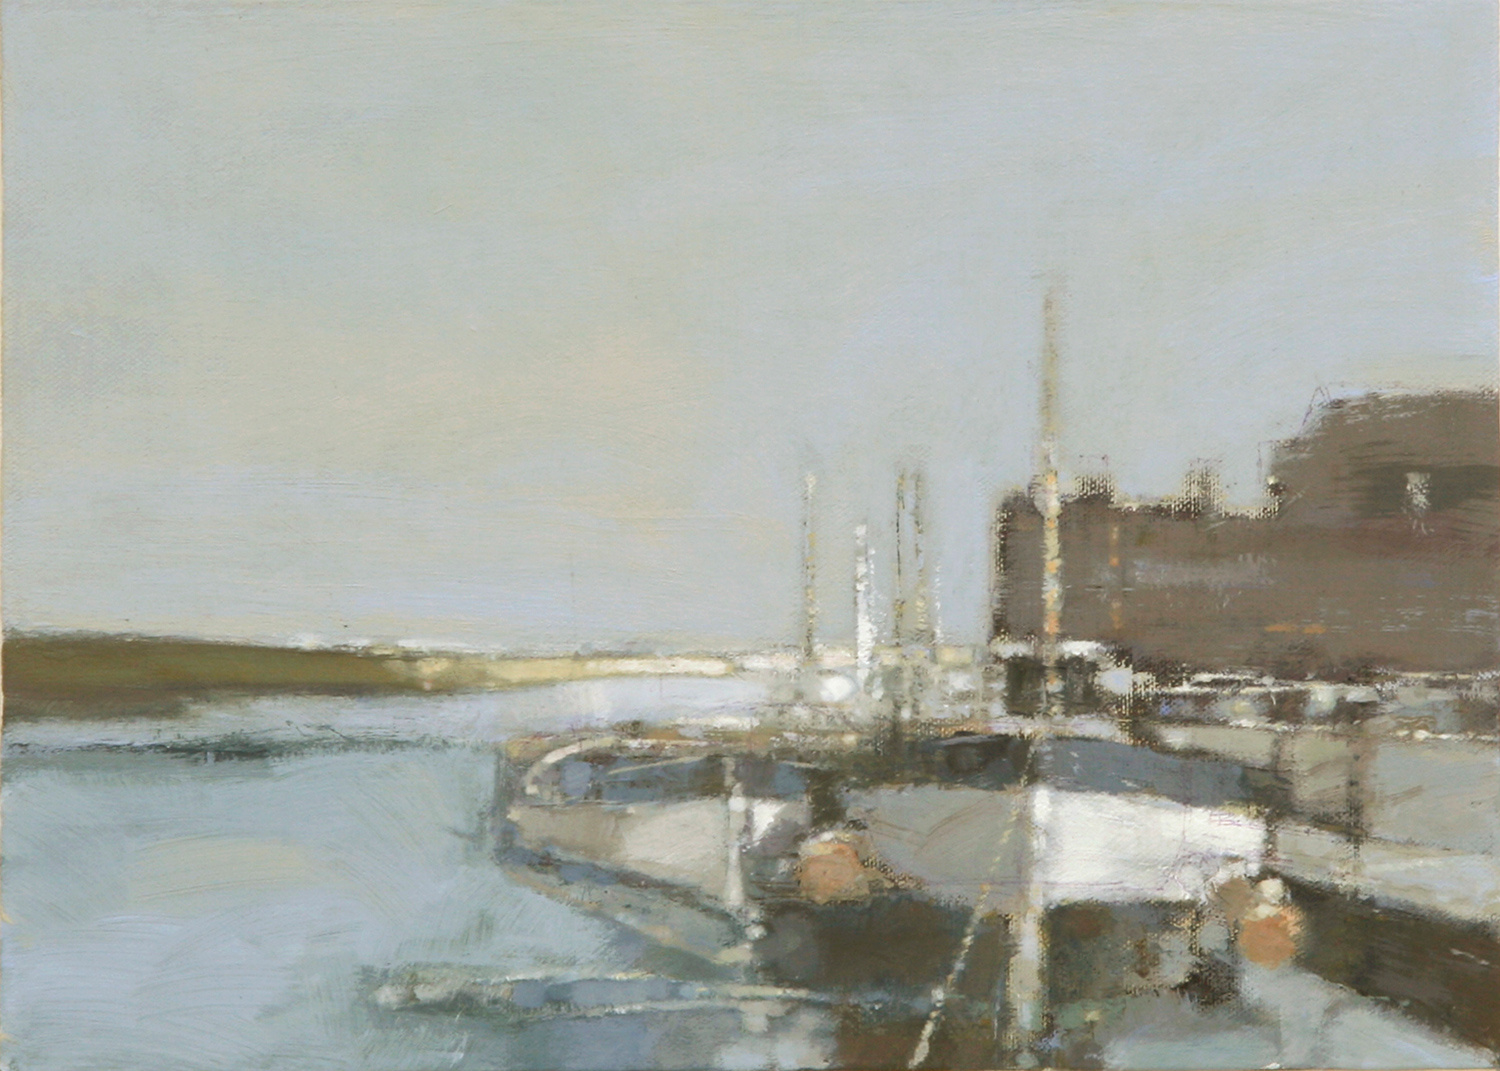 Blakeney Harbour No 2 by John Newland